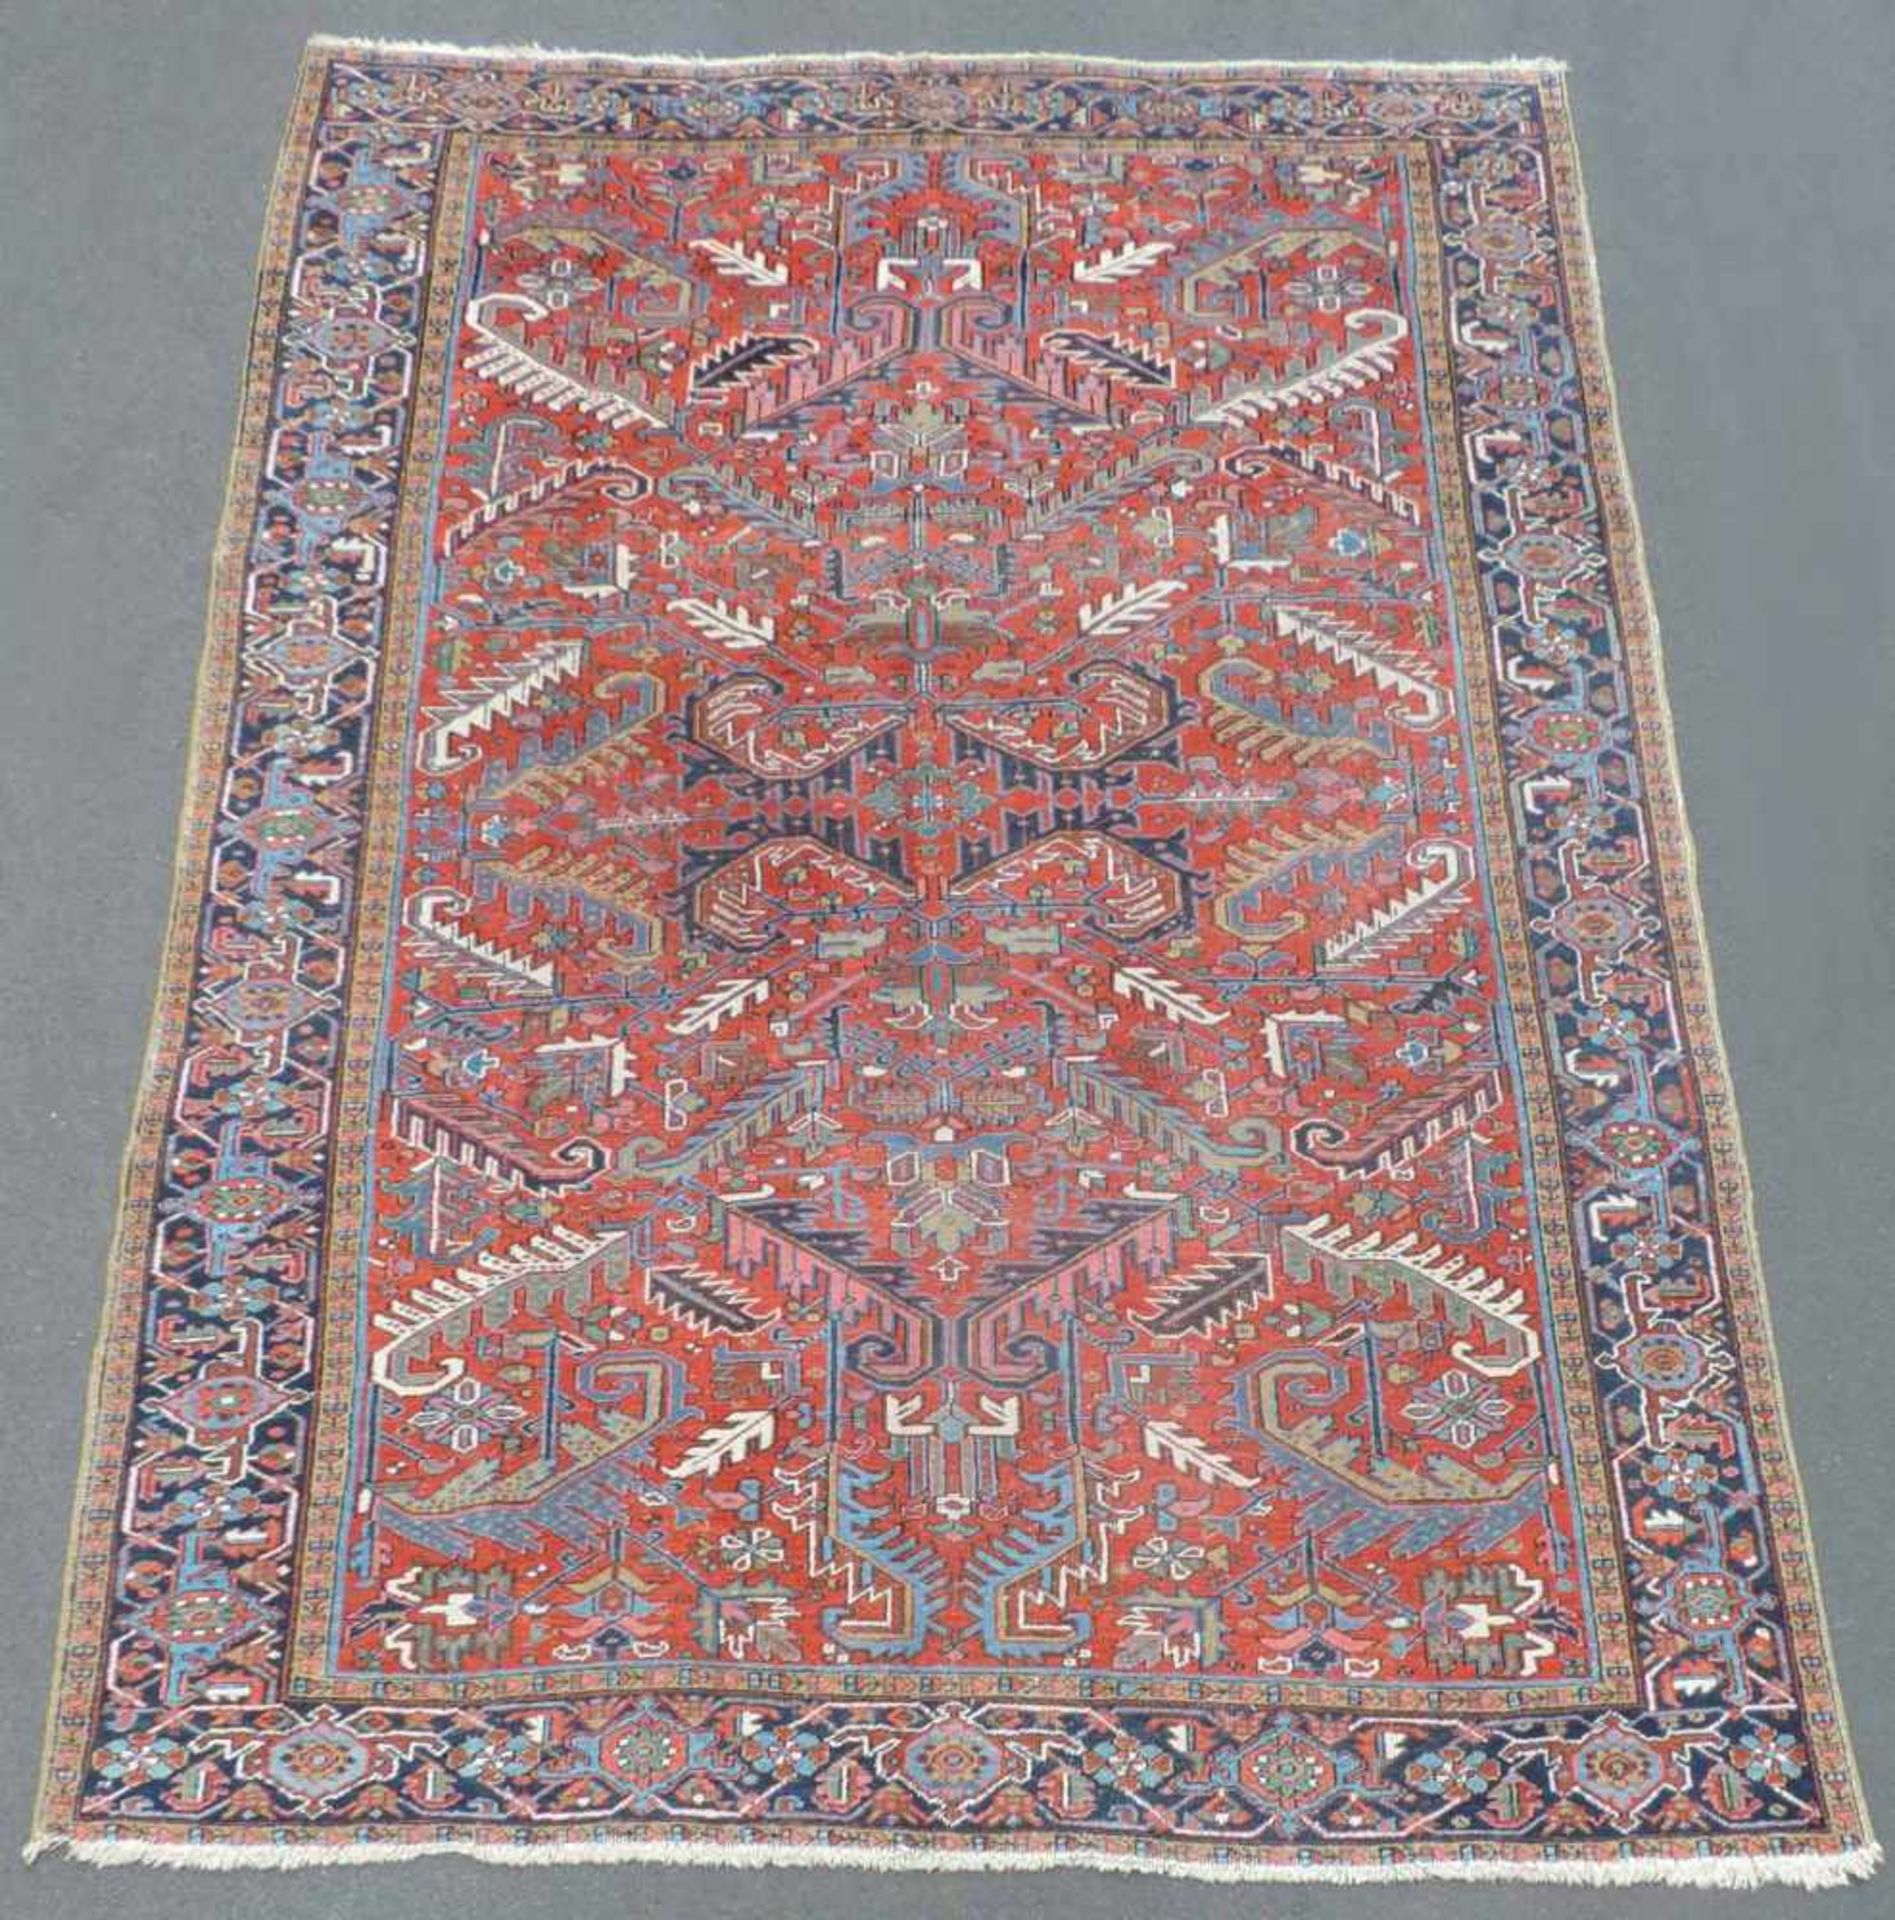 Heriz Persian carpet. Iran. Old, around 1940.